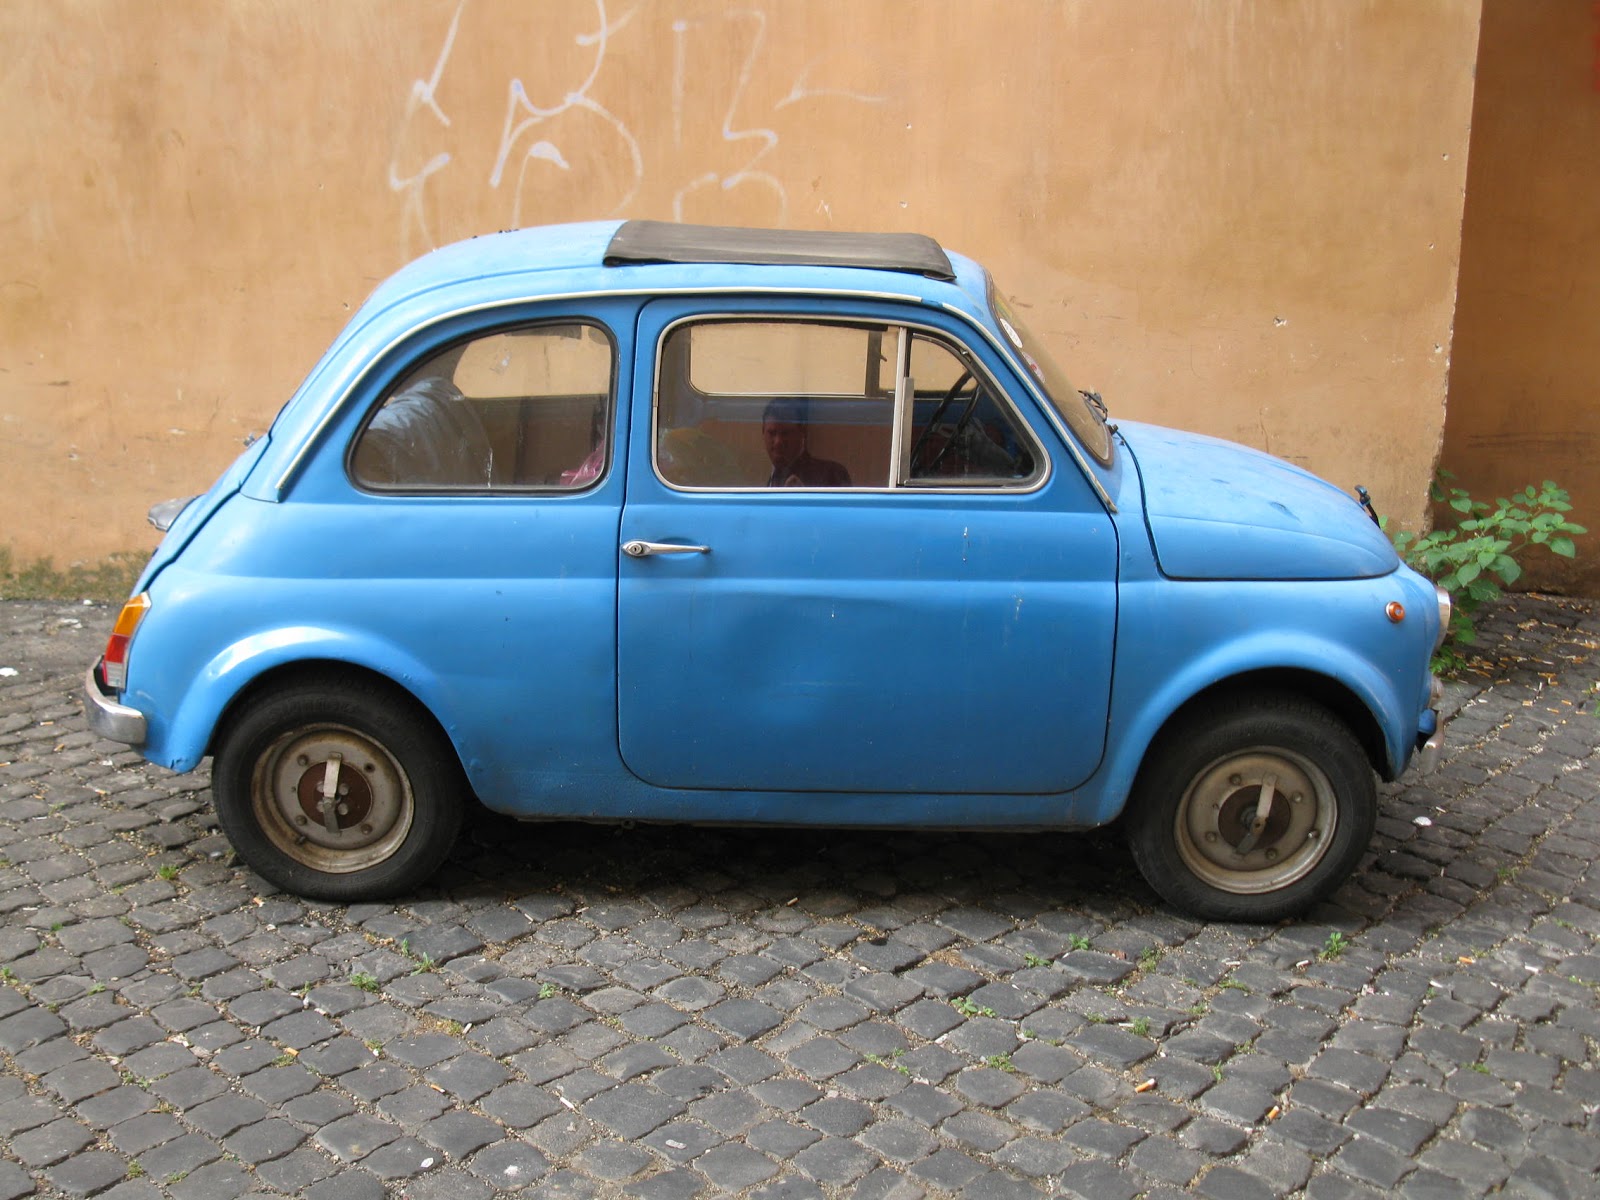 Orbis Catholicus Secundus: Toy Cars in Rome